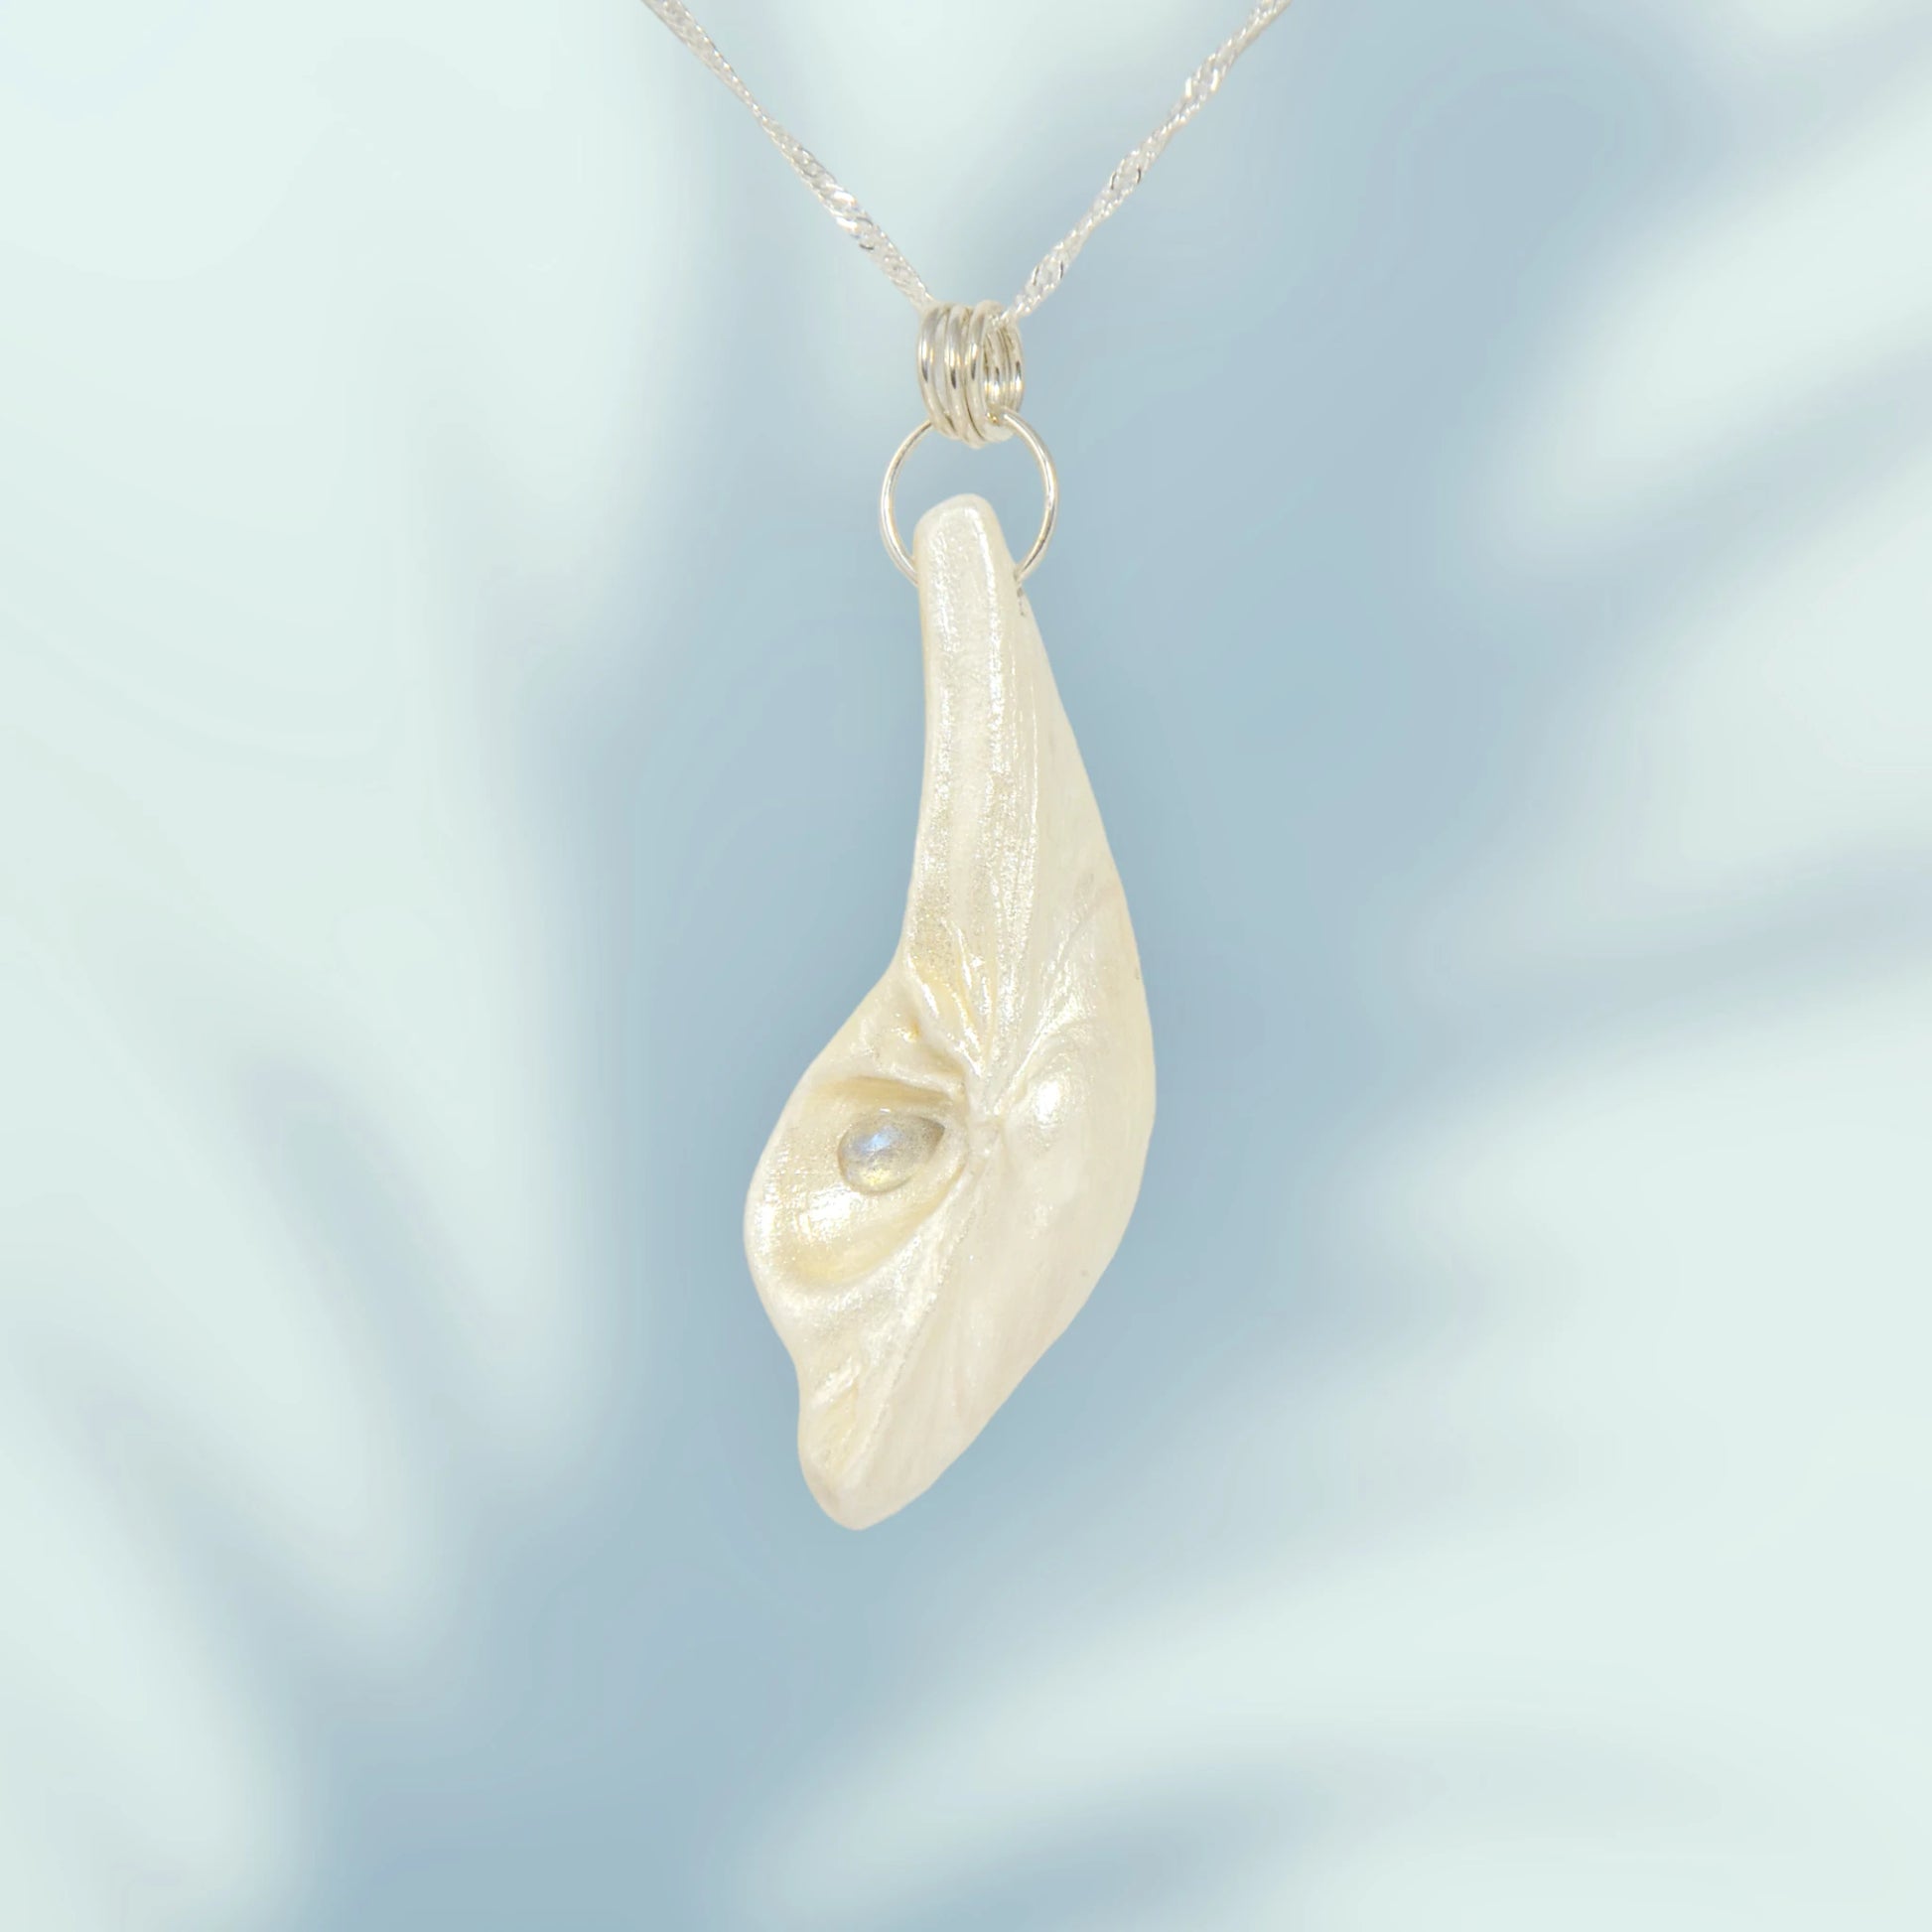 Cool Summer pendant made of natural seashell with a tear drop shape rose cut labradorite gemstone. 